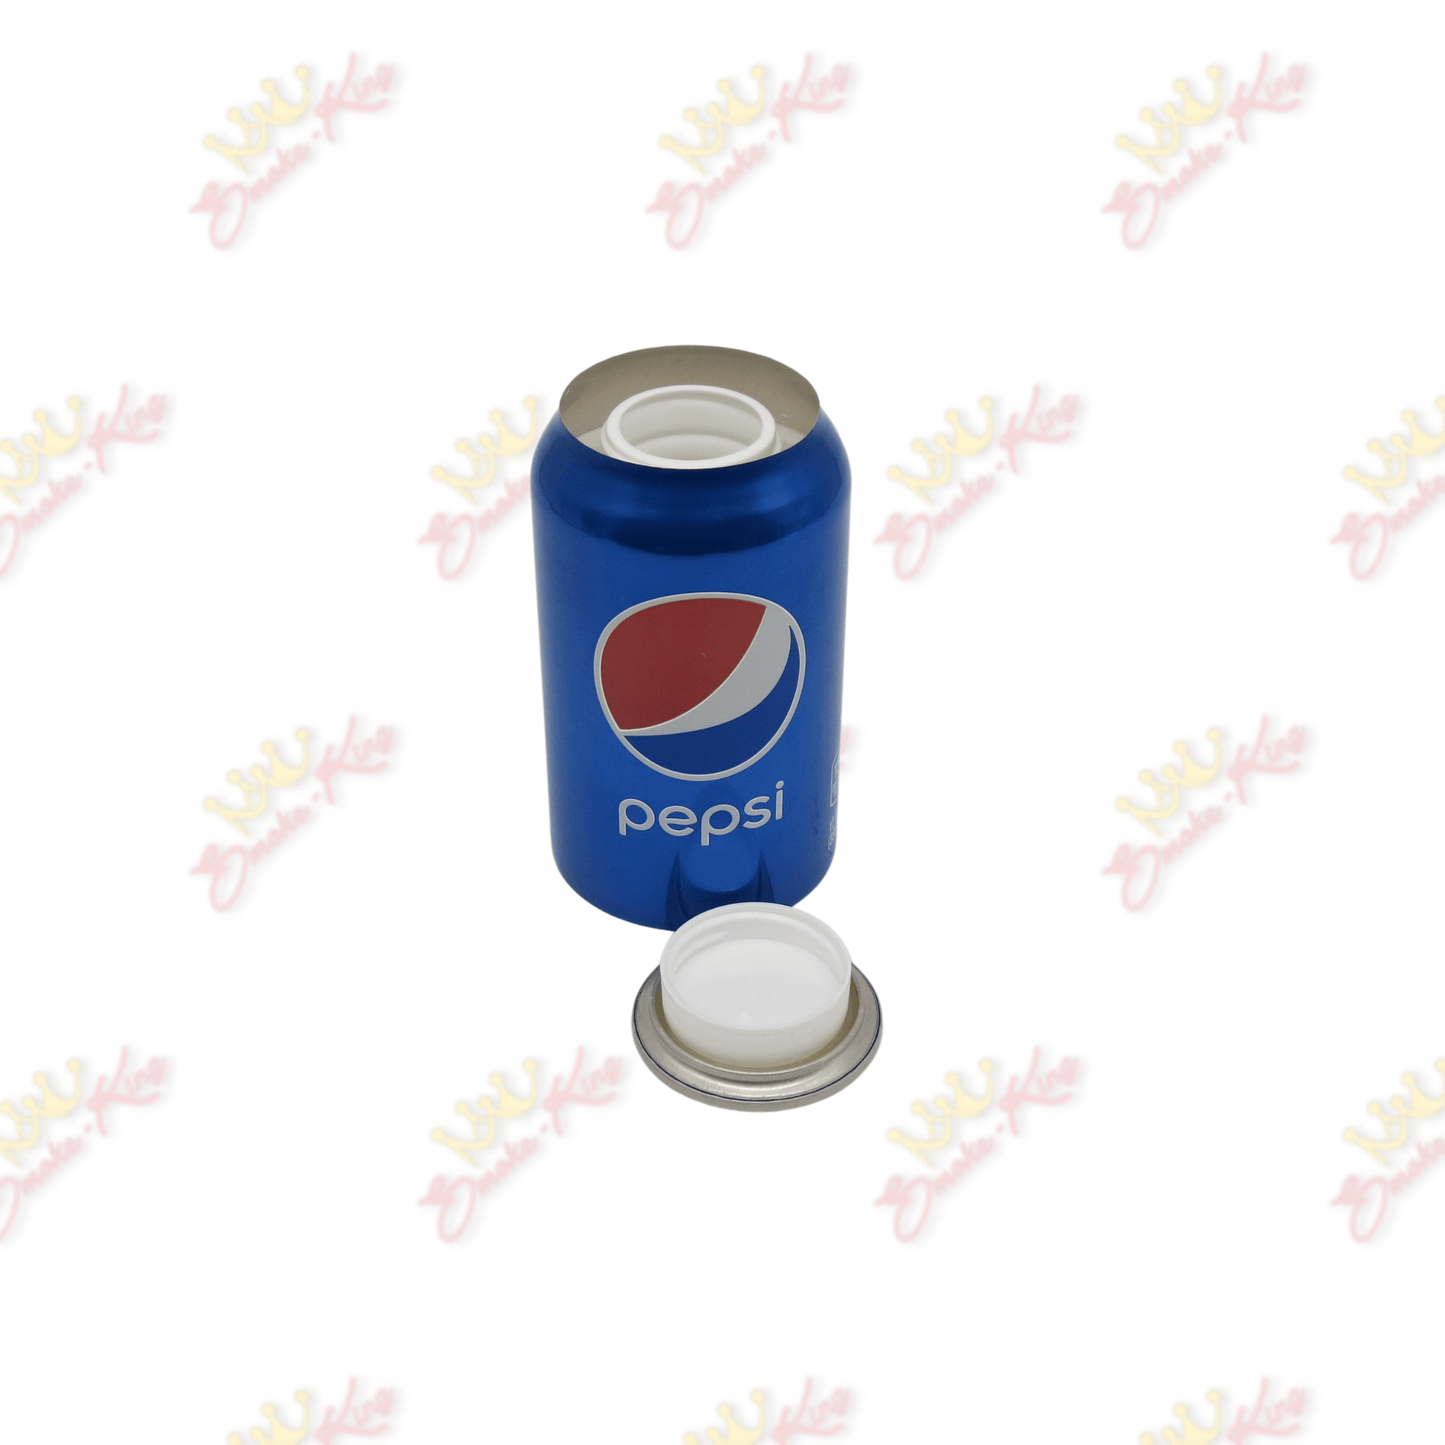 Pepsi secret stash can